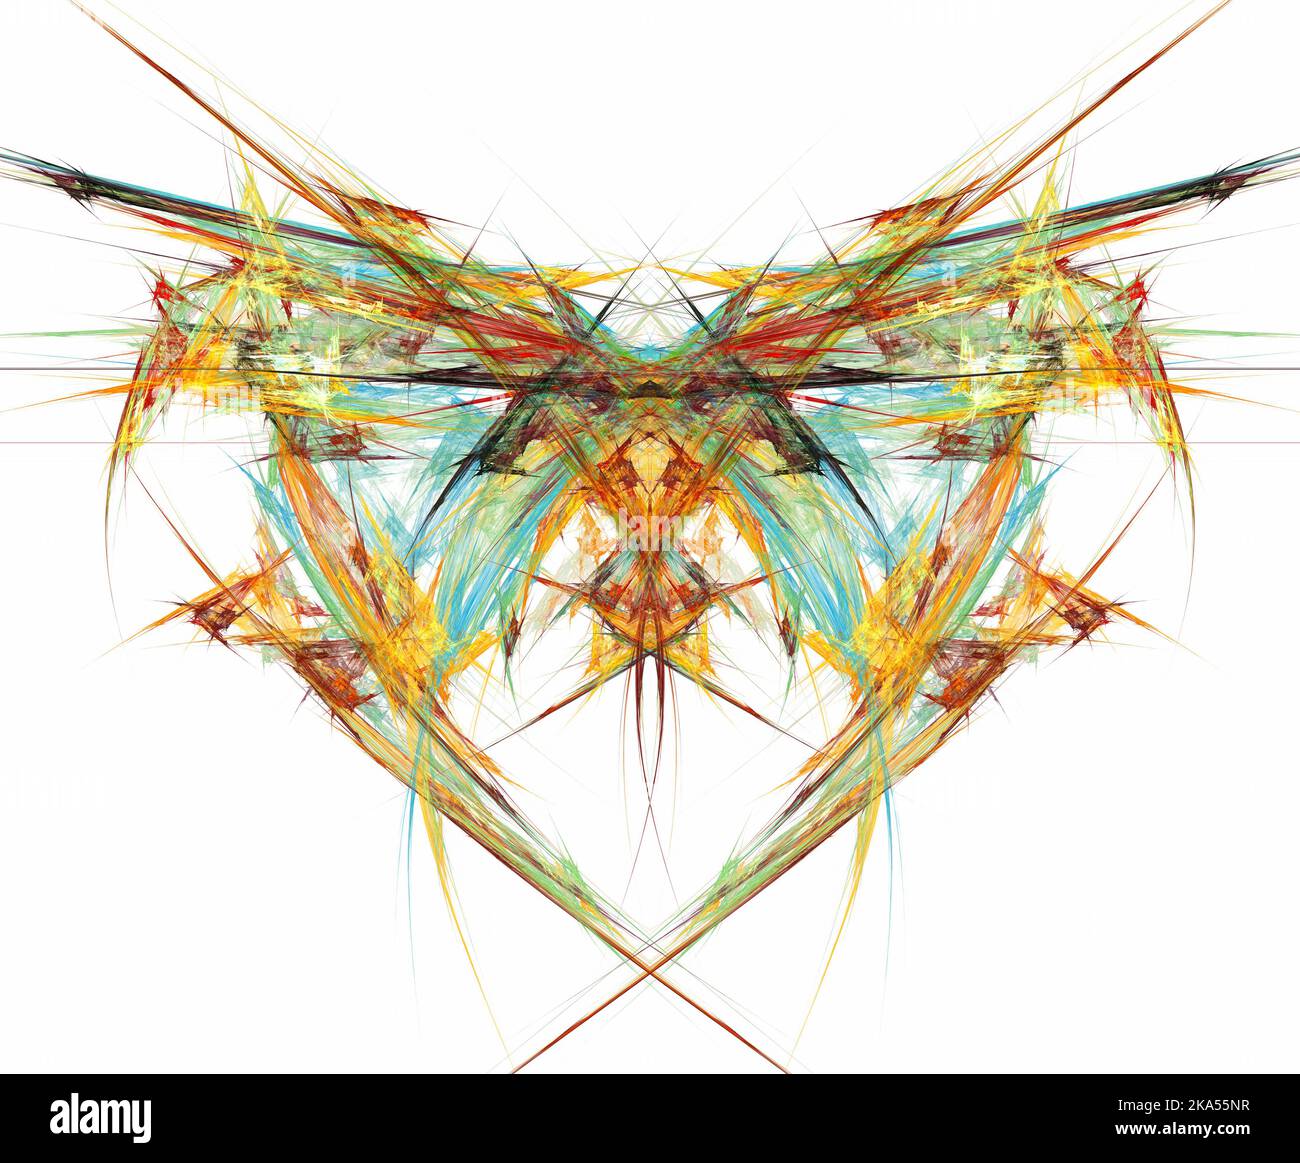 Farbenfrohe fraktale Flammen Kunstwerk Abstrakte Kunst geometrische Symmetrie farbenfrohe Kunst Stockfoto